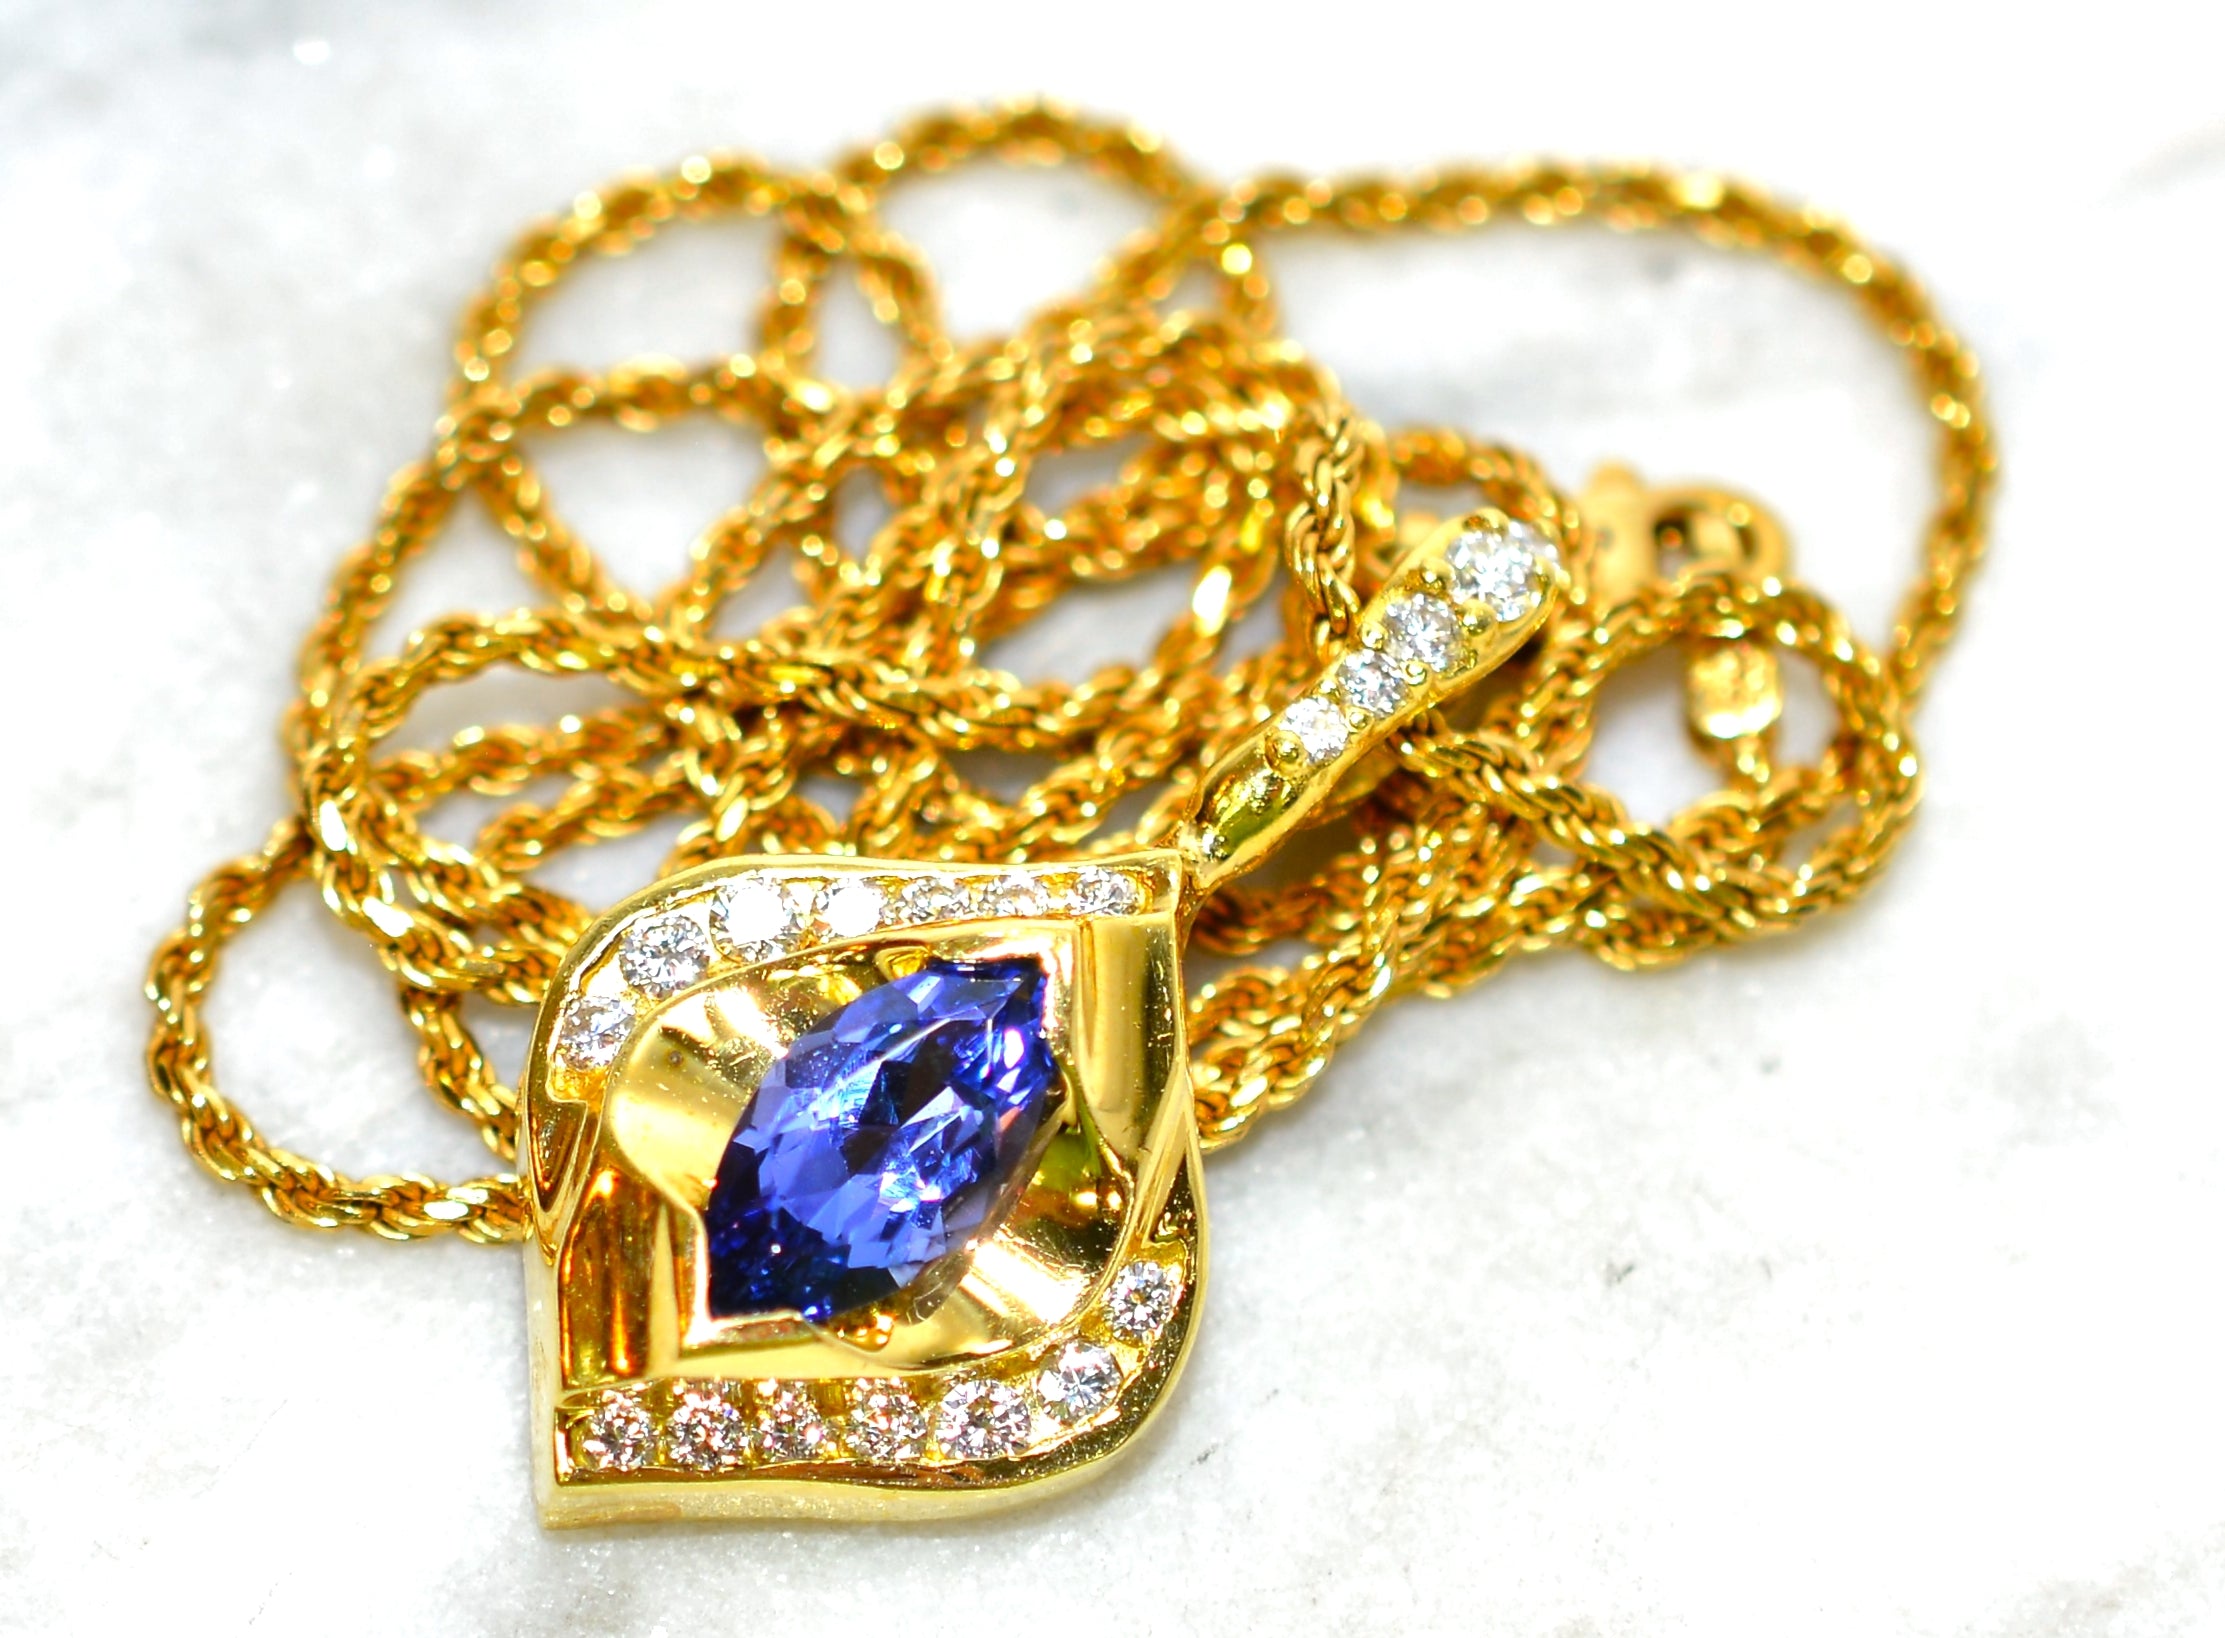 Natural D'Block Tanzanite & Diamond Necklace 18K Solid Gold 1.29tcw Gemstone Necklace Estate Necklace Cocktail Statement Necklace Birthstone